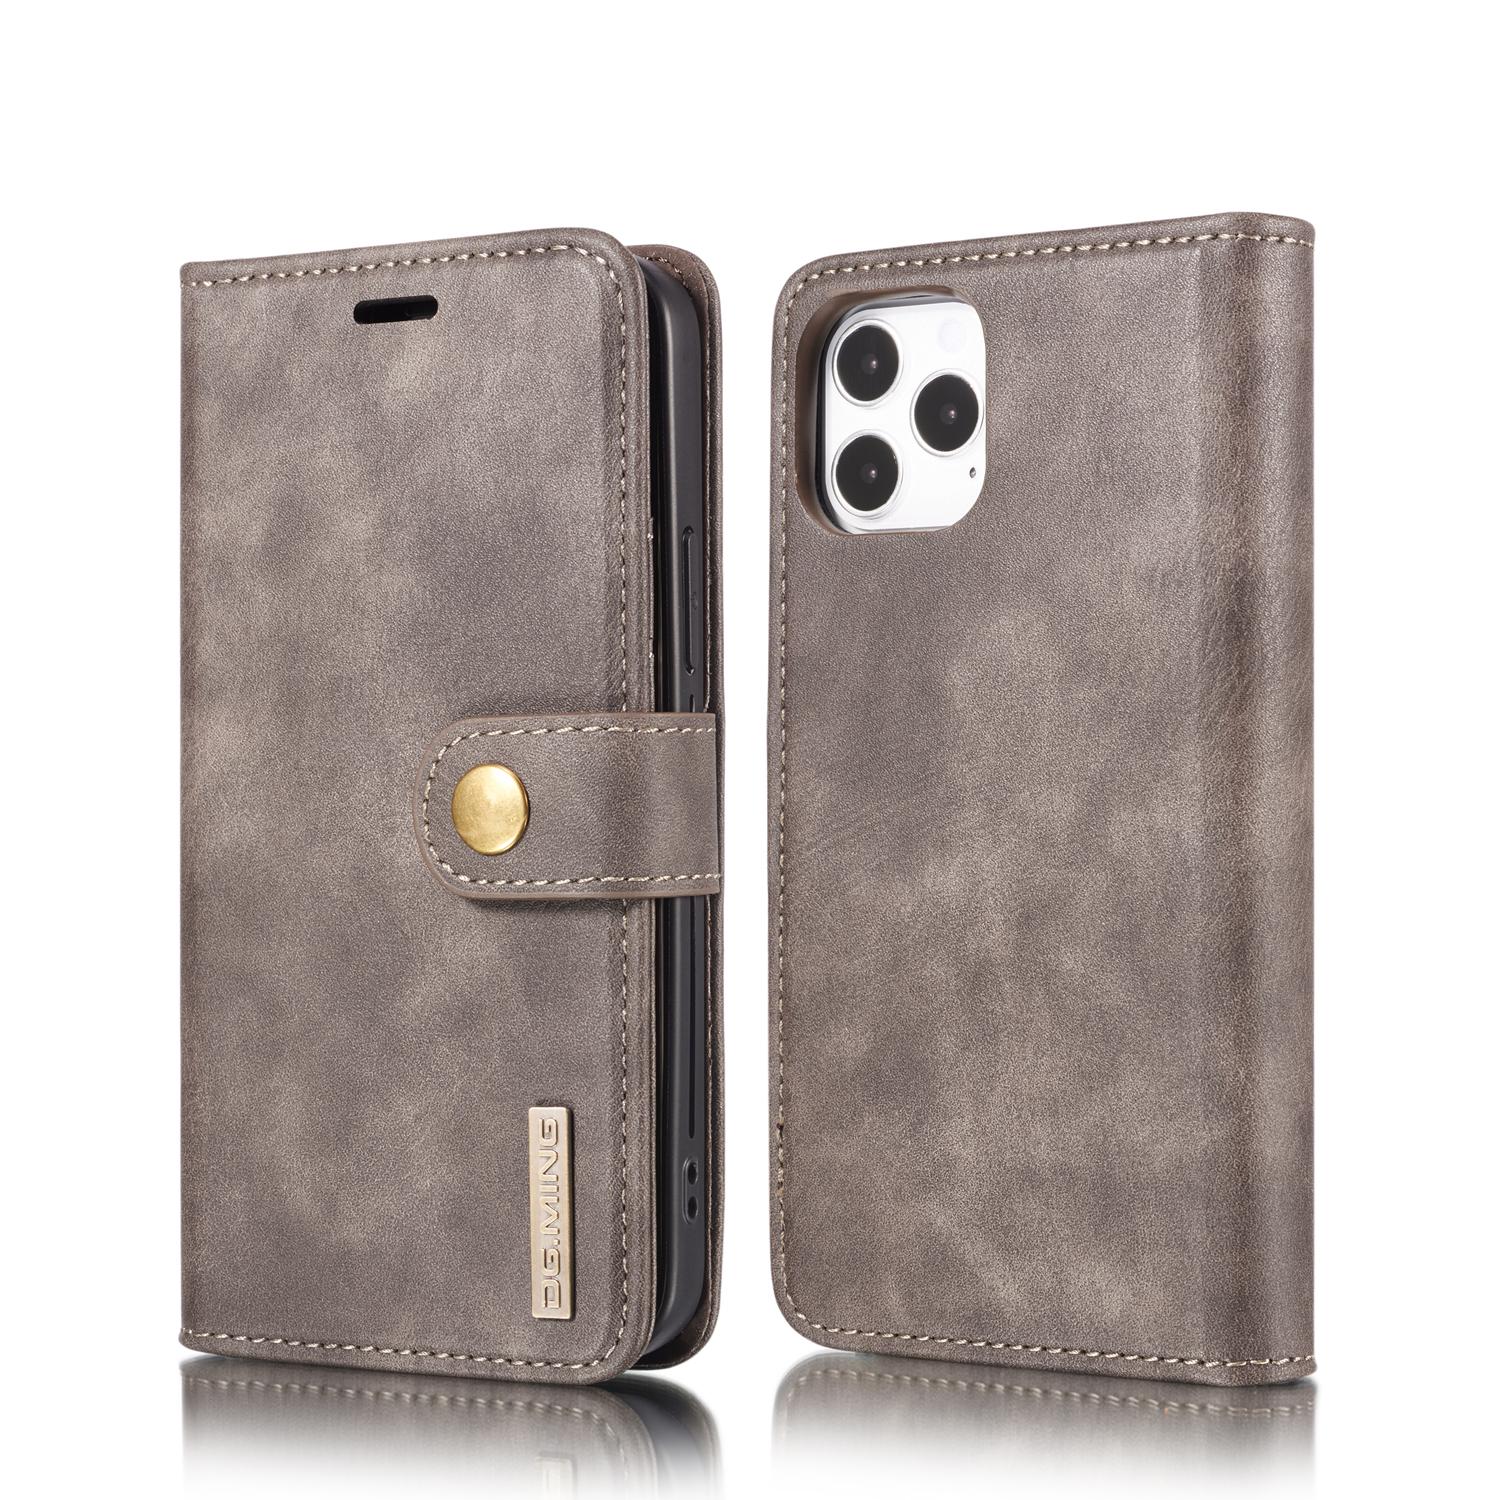 iPhone 12 Pro Max Plånboksfodral med avtagbart skal, brun